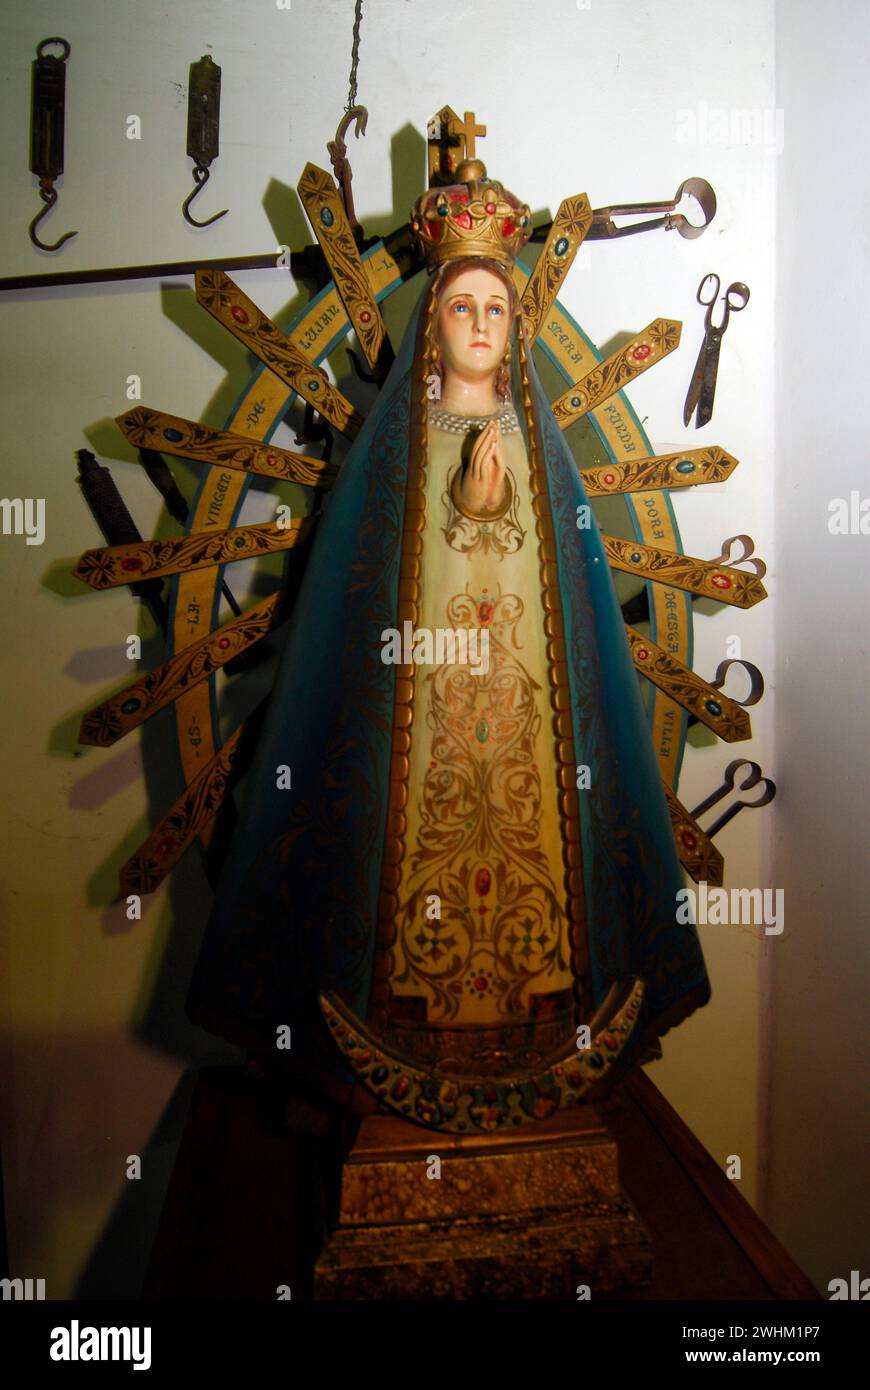 Adoration of the virgin mary Stock Photo